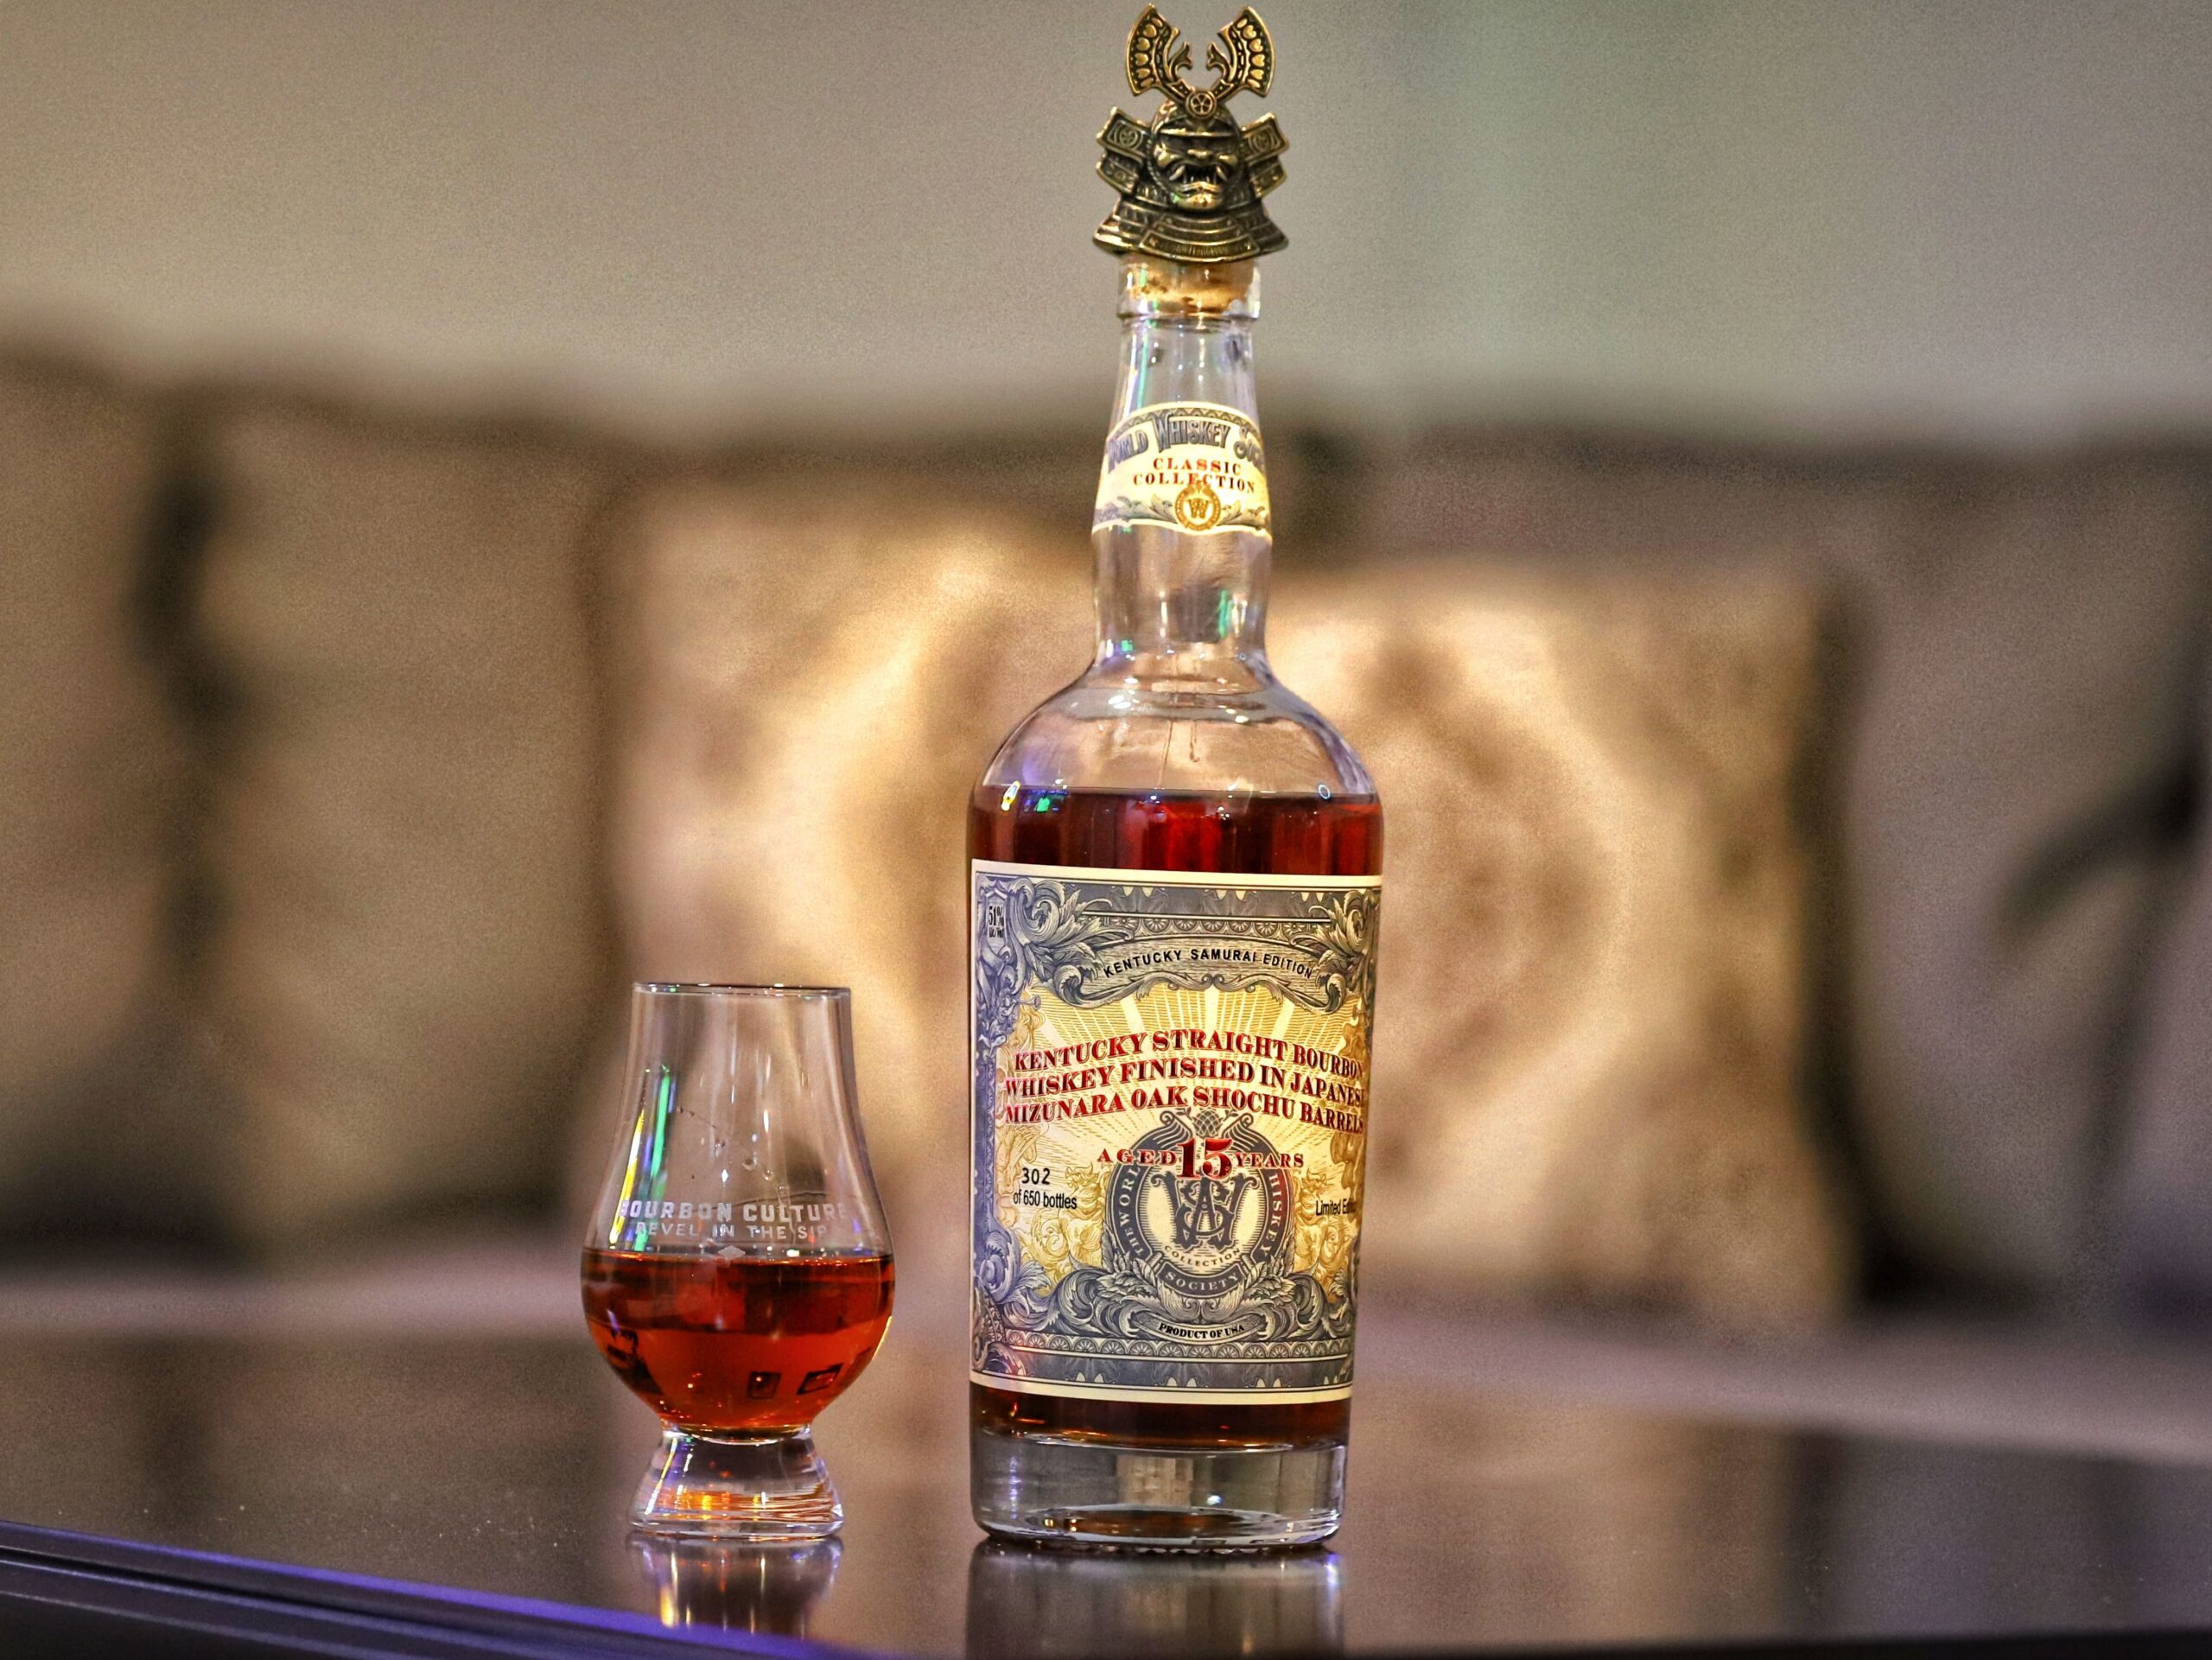 World Whiskey Society 15 Year Old Kentucky Bourbon Finished in Japanese Mizunara Oak Shochu Barrels Review